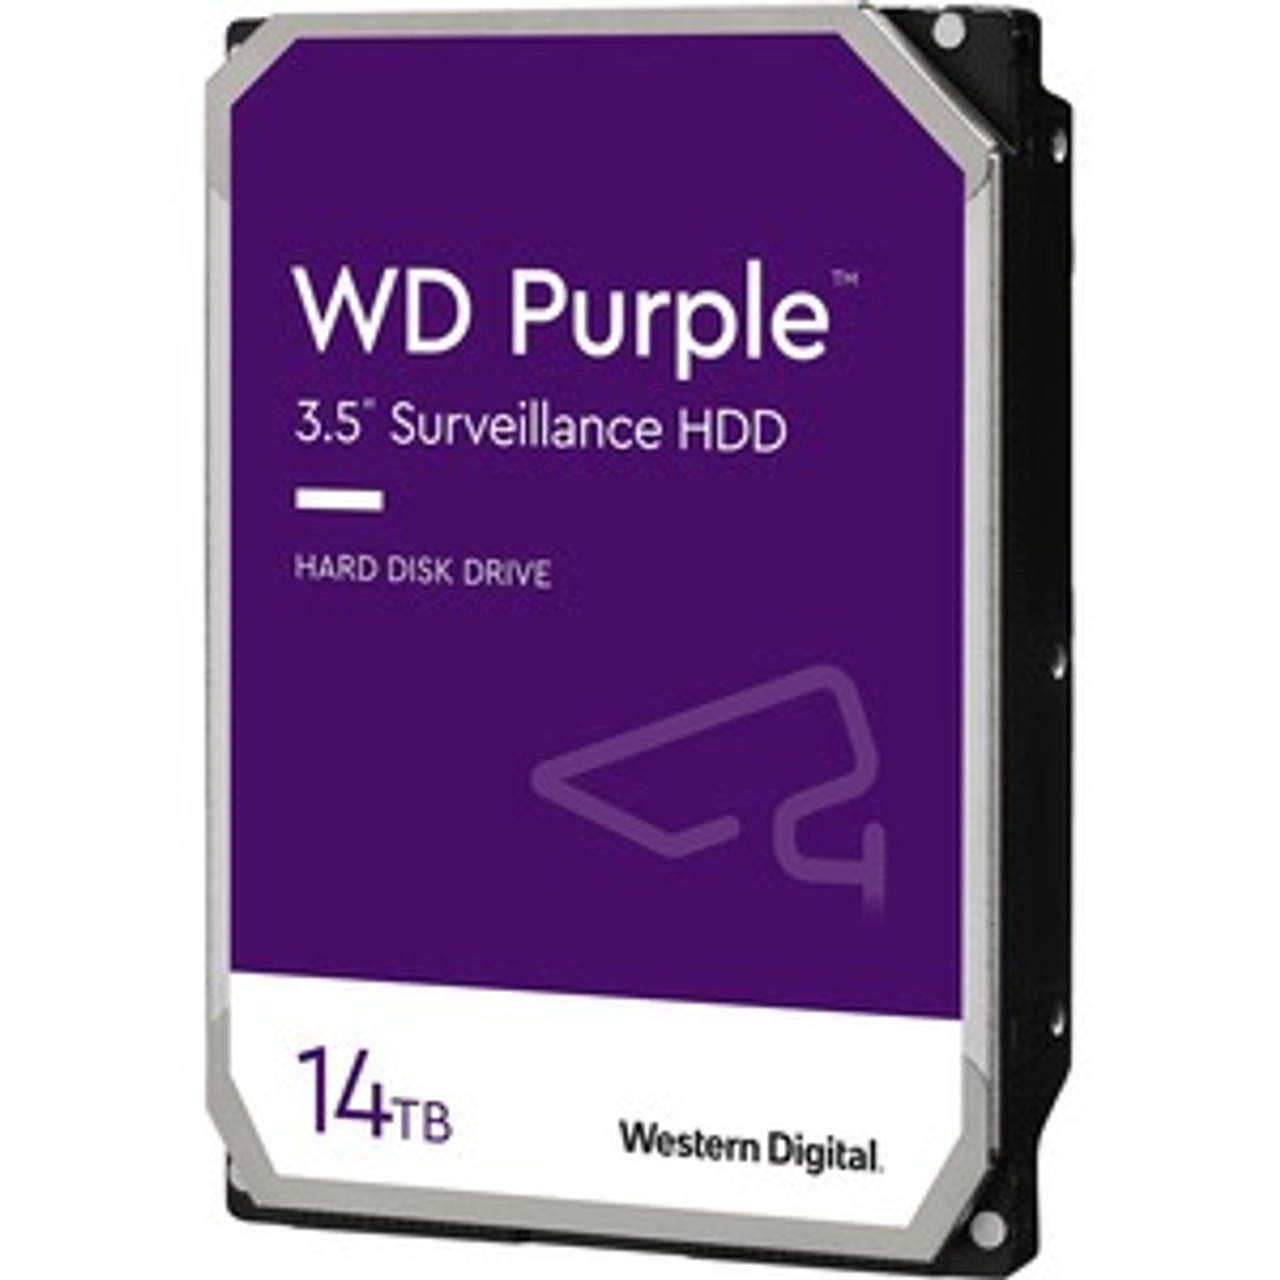 WD140PURZ Western Digital Purple 14TB 7200RPM SATA 6Gbps 256MB Cache (512e) 3.5-inch Internal Hard Drive